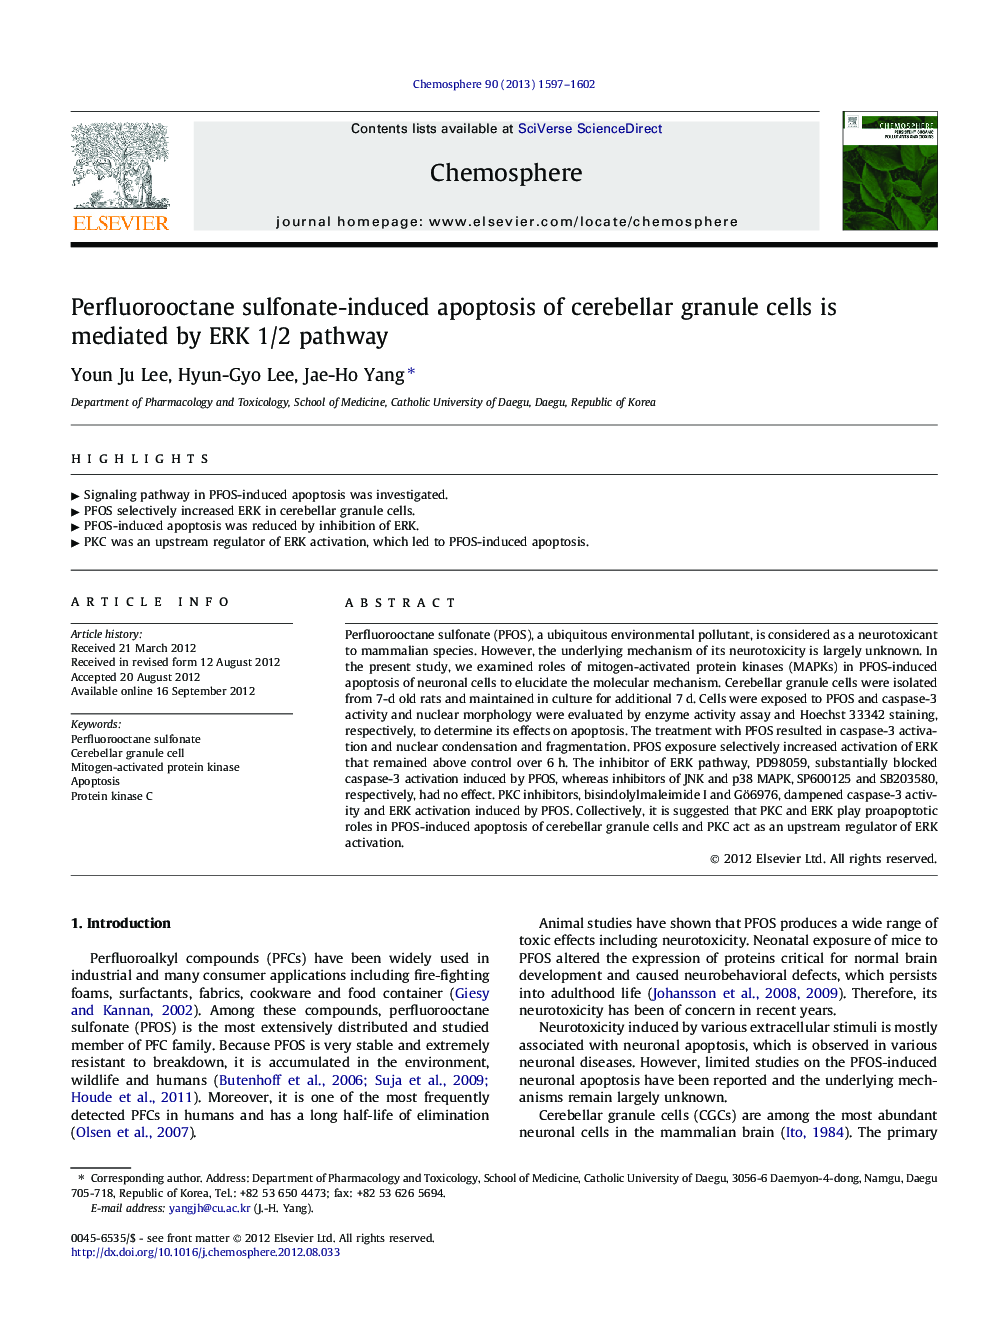 Perfluorooctane sulfonate-induced apoptosis of cerebellar granule cells is mediated by ERK 1/2 pathway